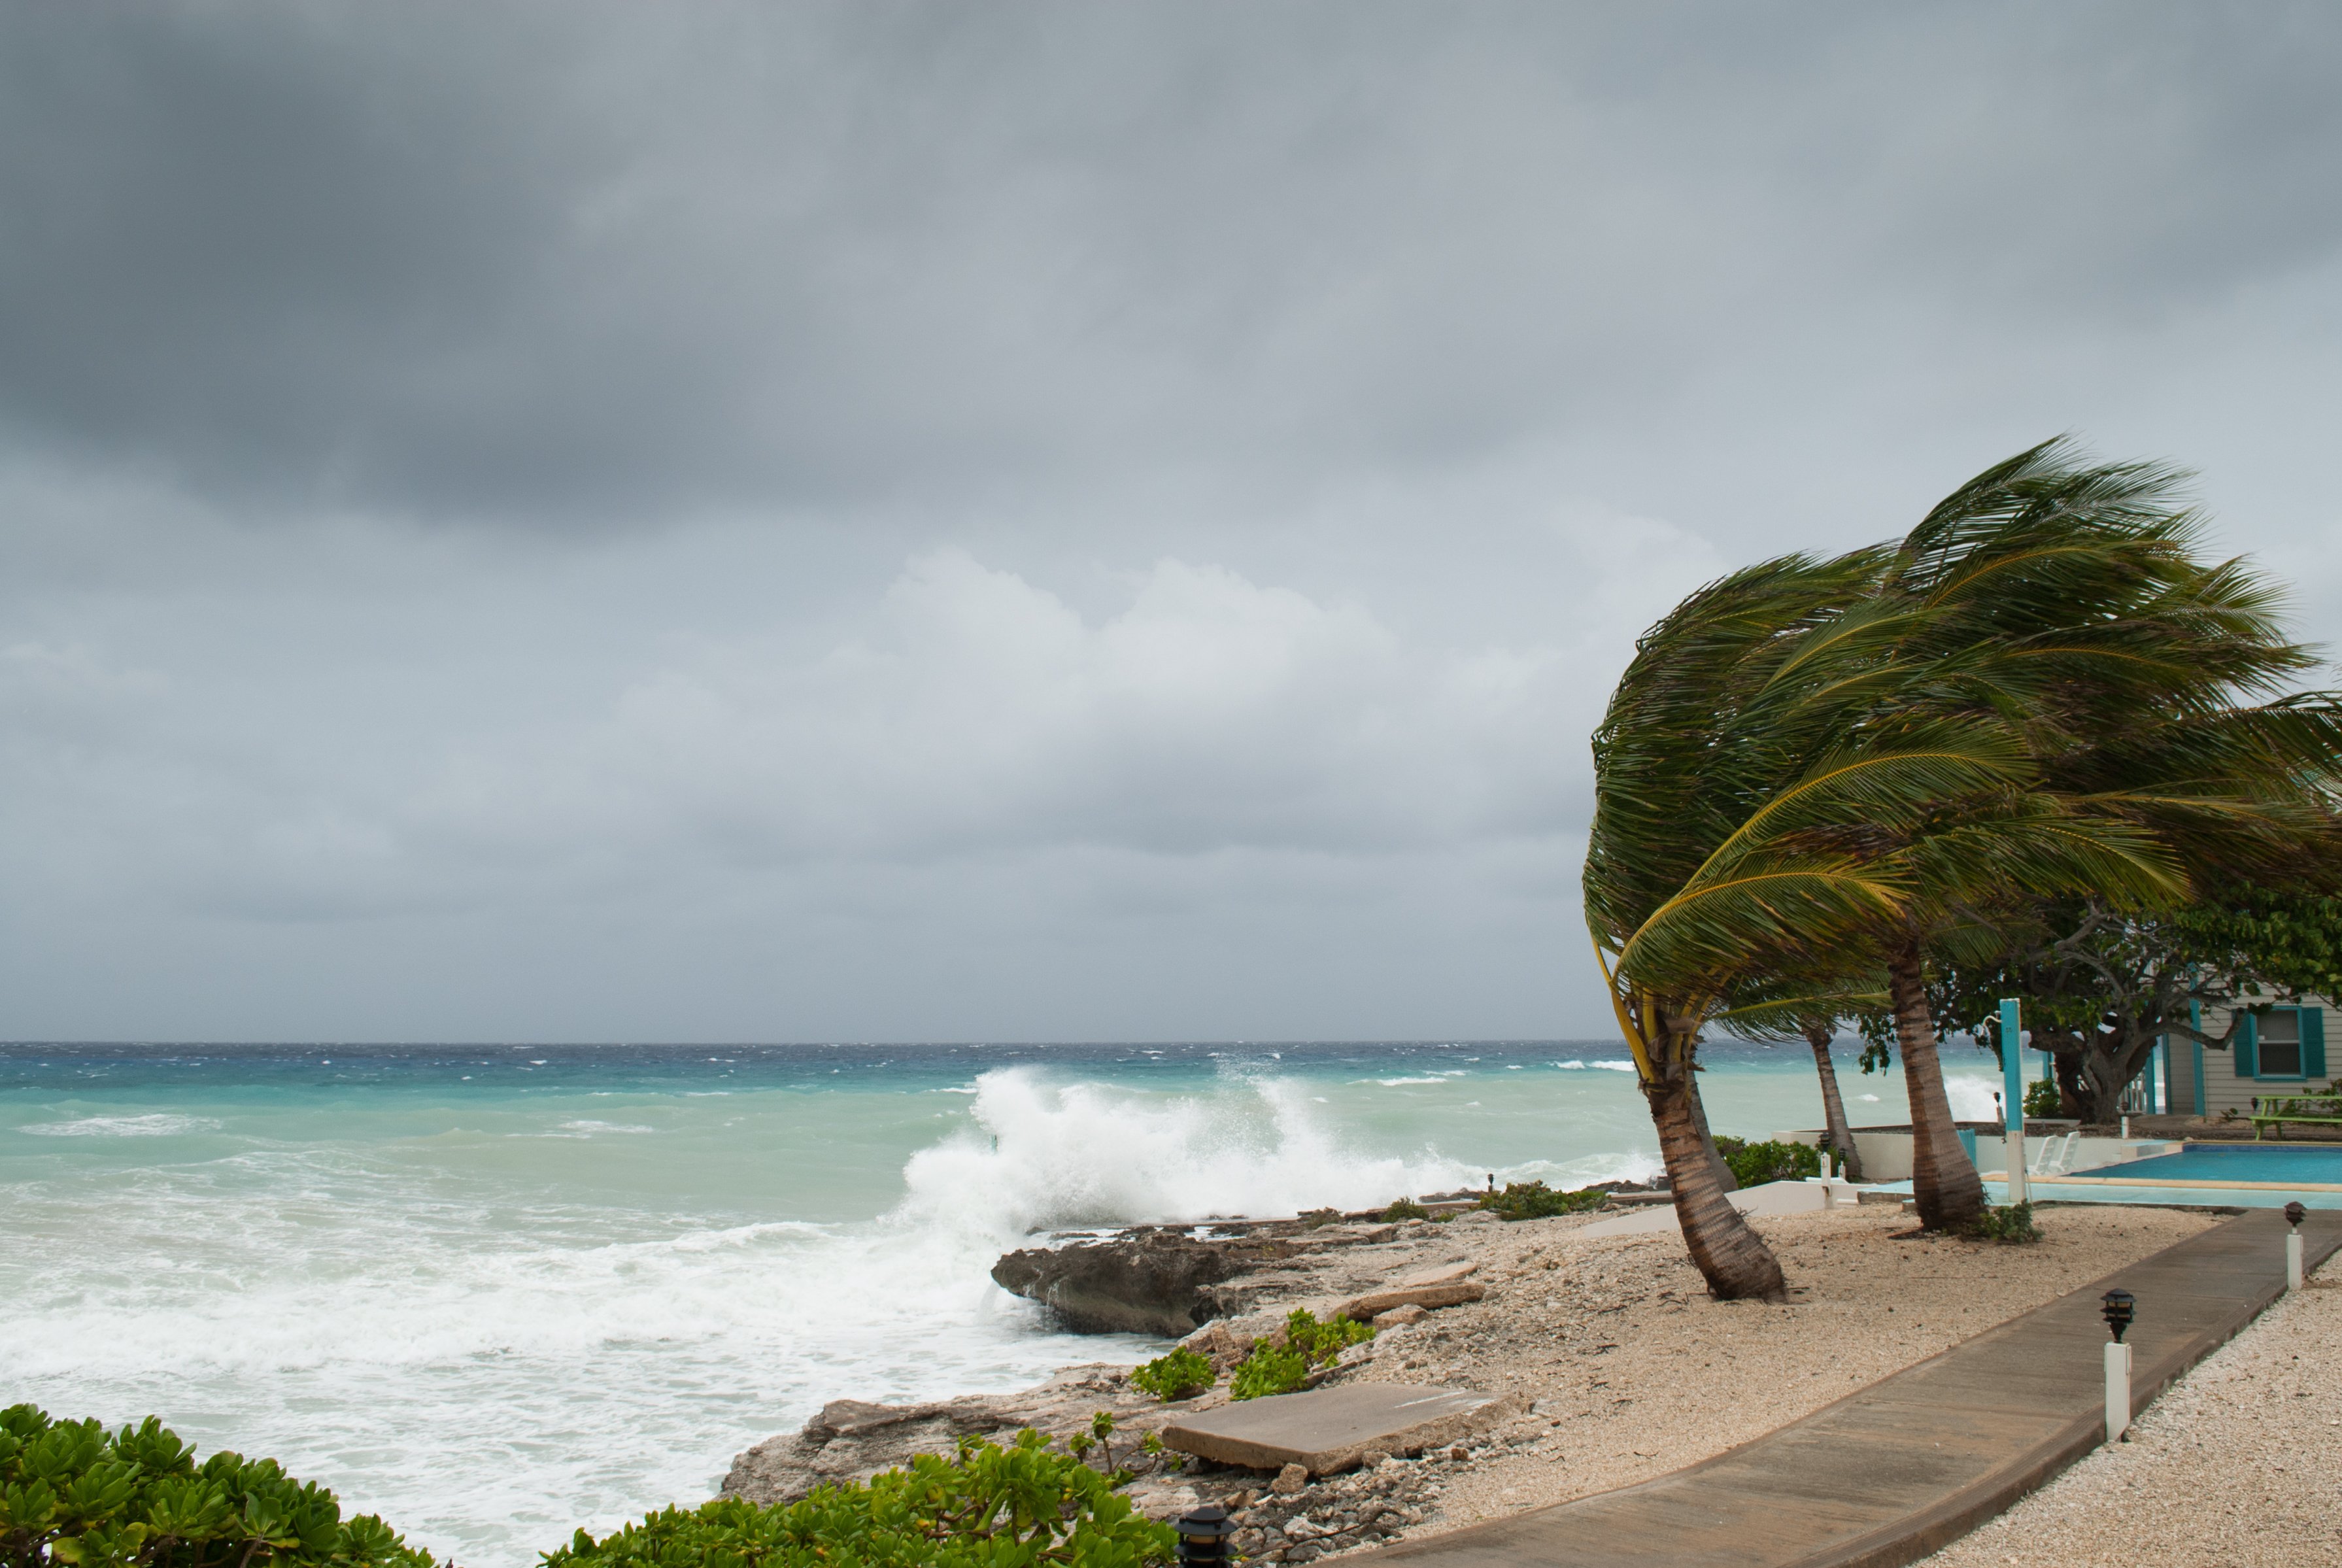 A windy beach scene. | Photo: Shutterstock